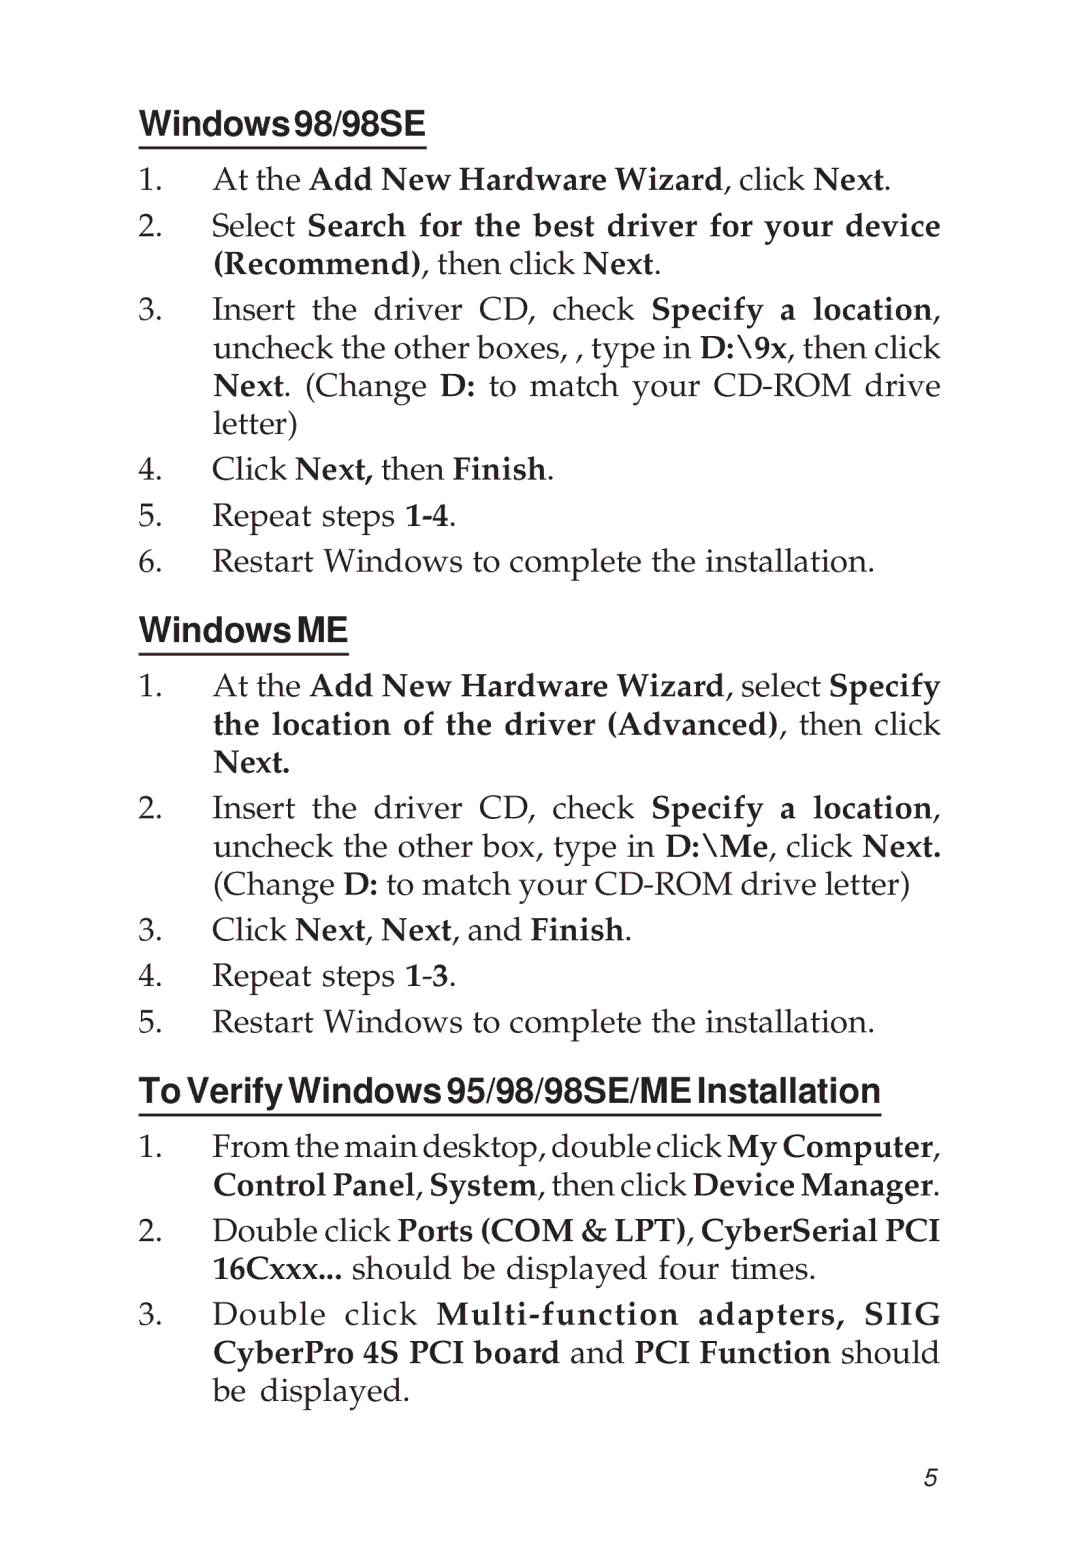 SIIG PCI 4S manual Windows98/98SE, Windows ME, To Verify Windows 95/98/98SE/ME Installation 